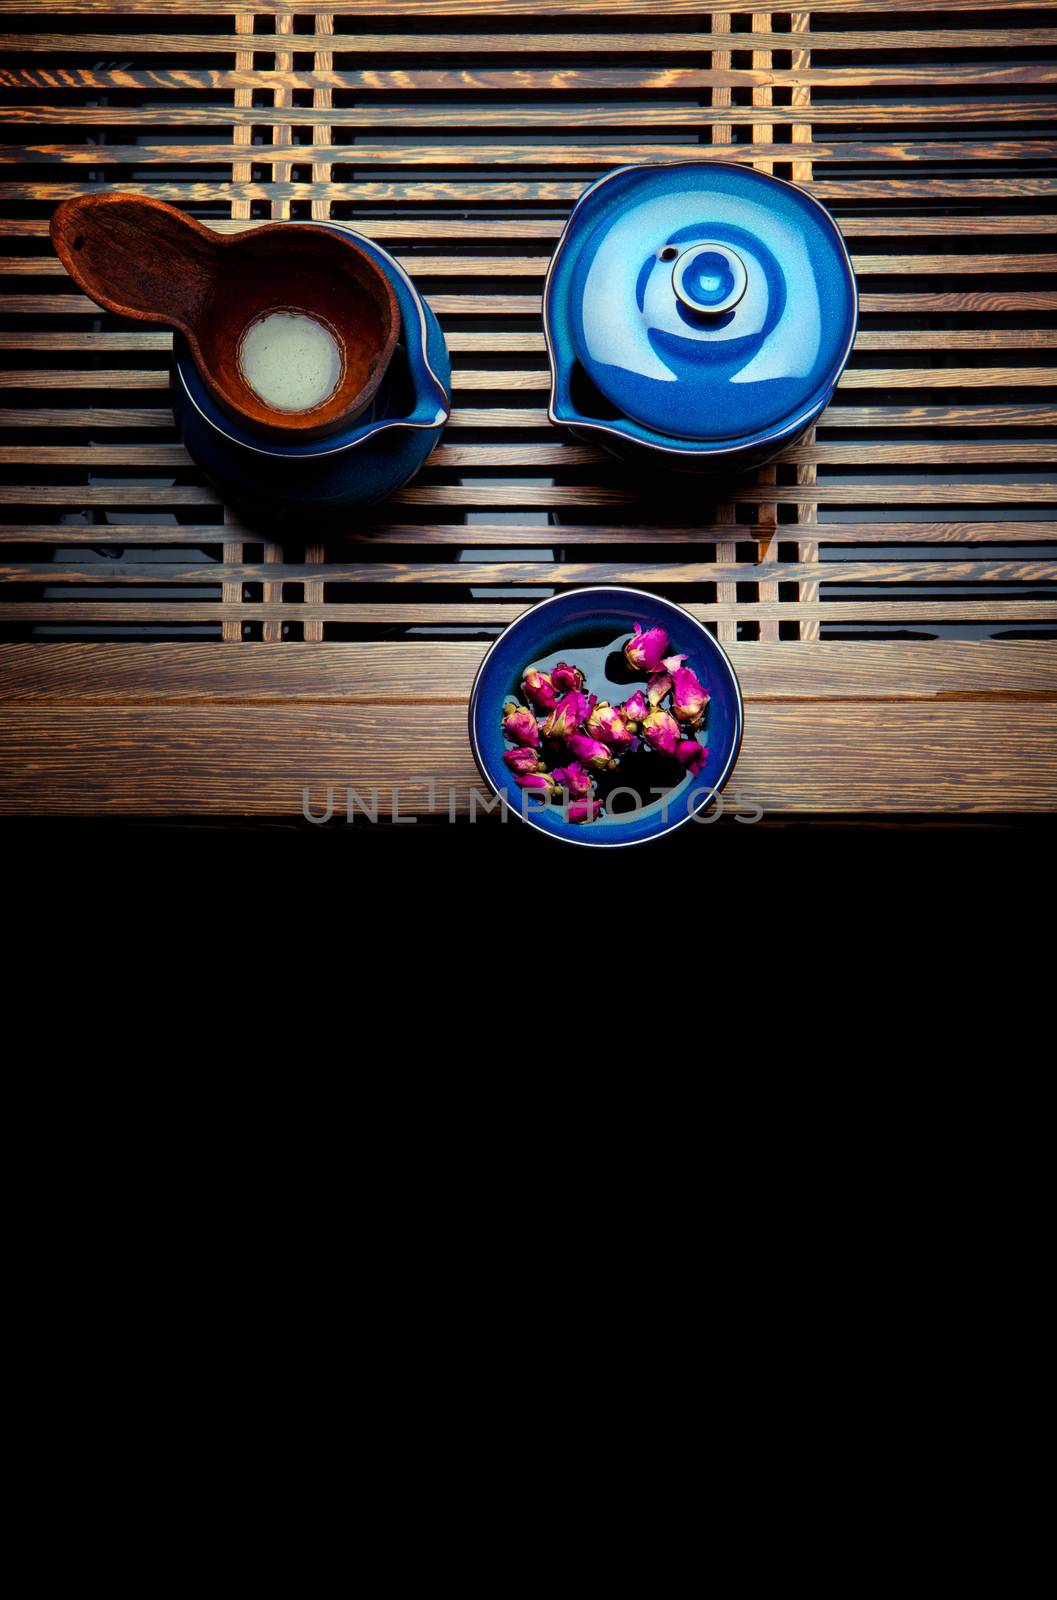 Chinese Tea rose studio quality dark background by Jonicartoon